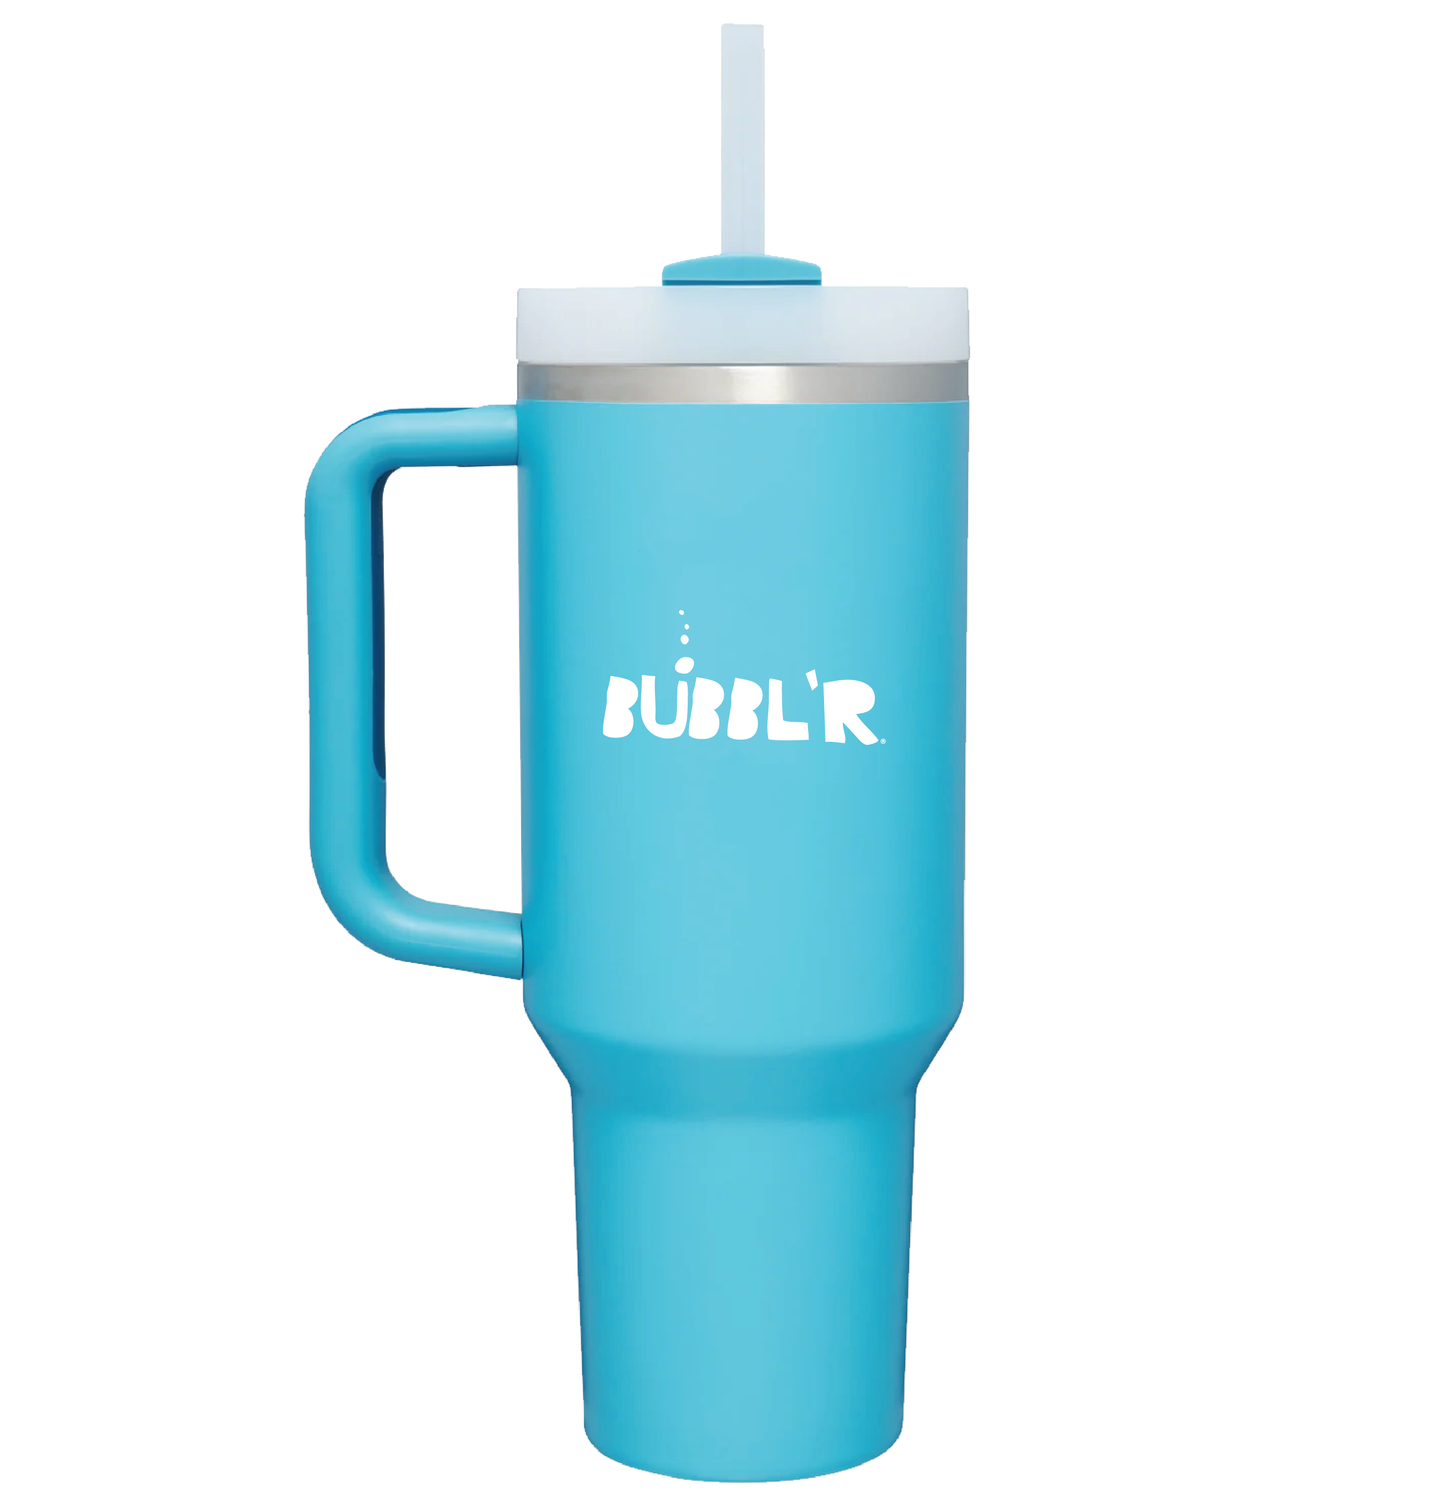 Tall aqua tumbler with white bubbl'r logo in center